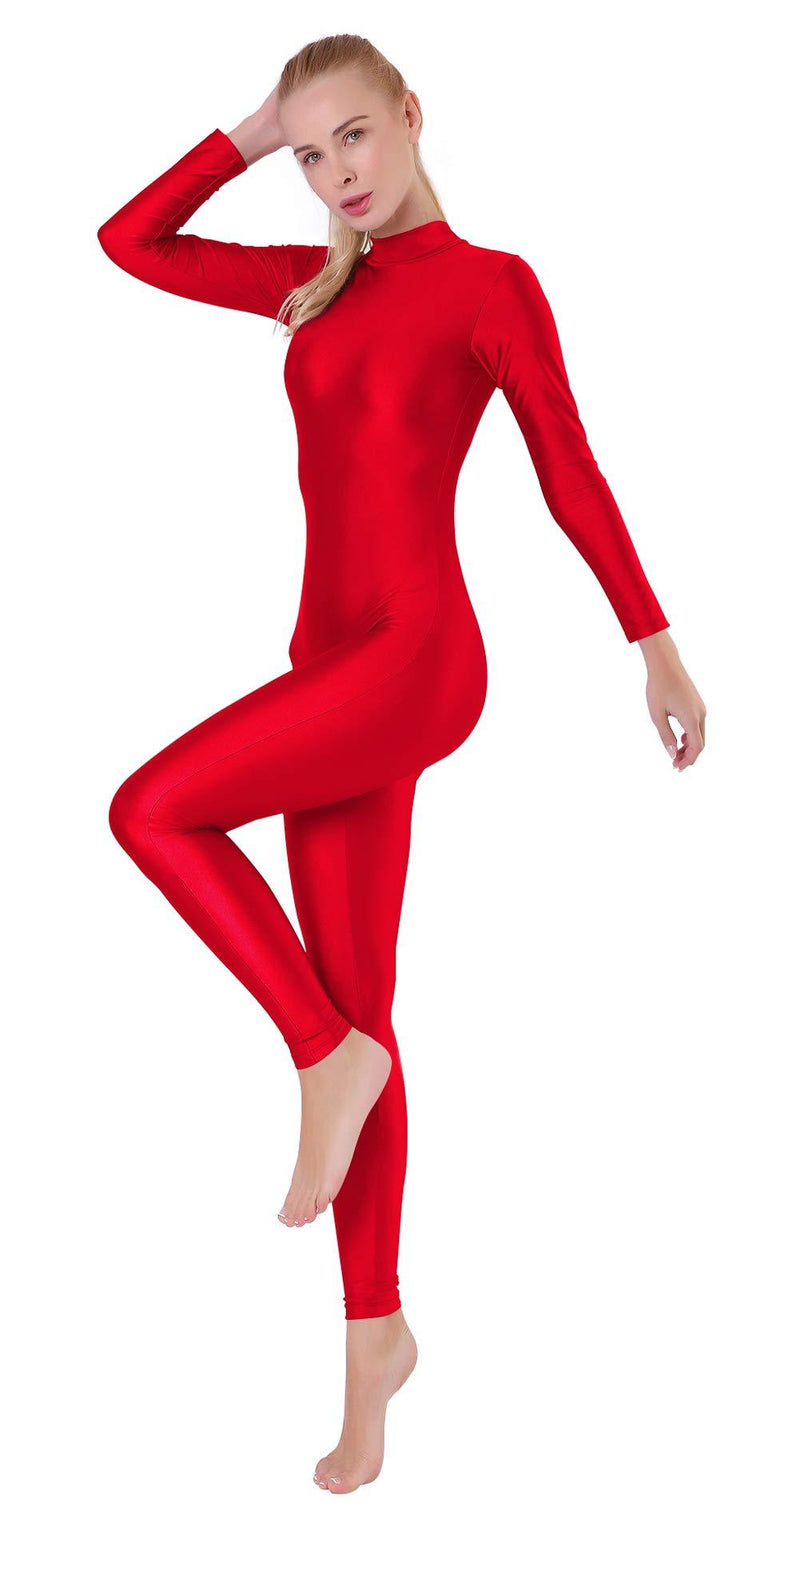 [AUSTRALIA] - Kepblom Womens Turtleneck Long Sleeve Dance Unitard One Piece Full Bodysuit Costumes Red Small 